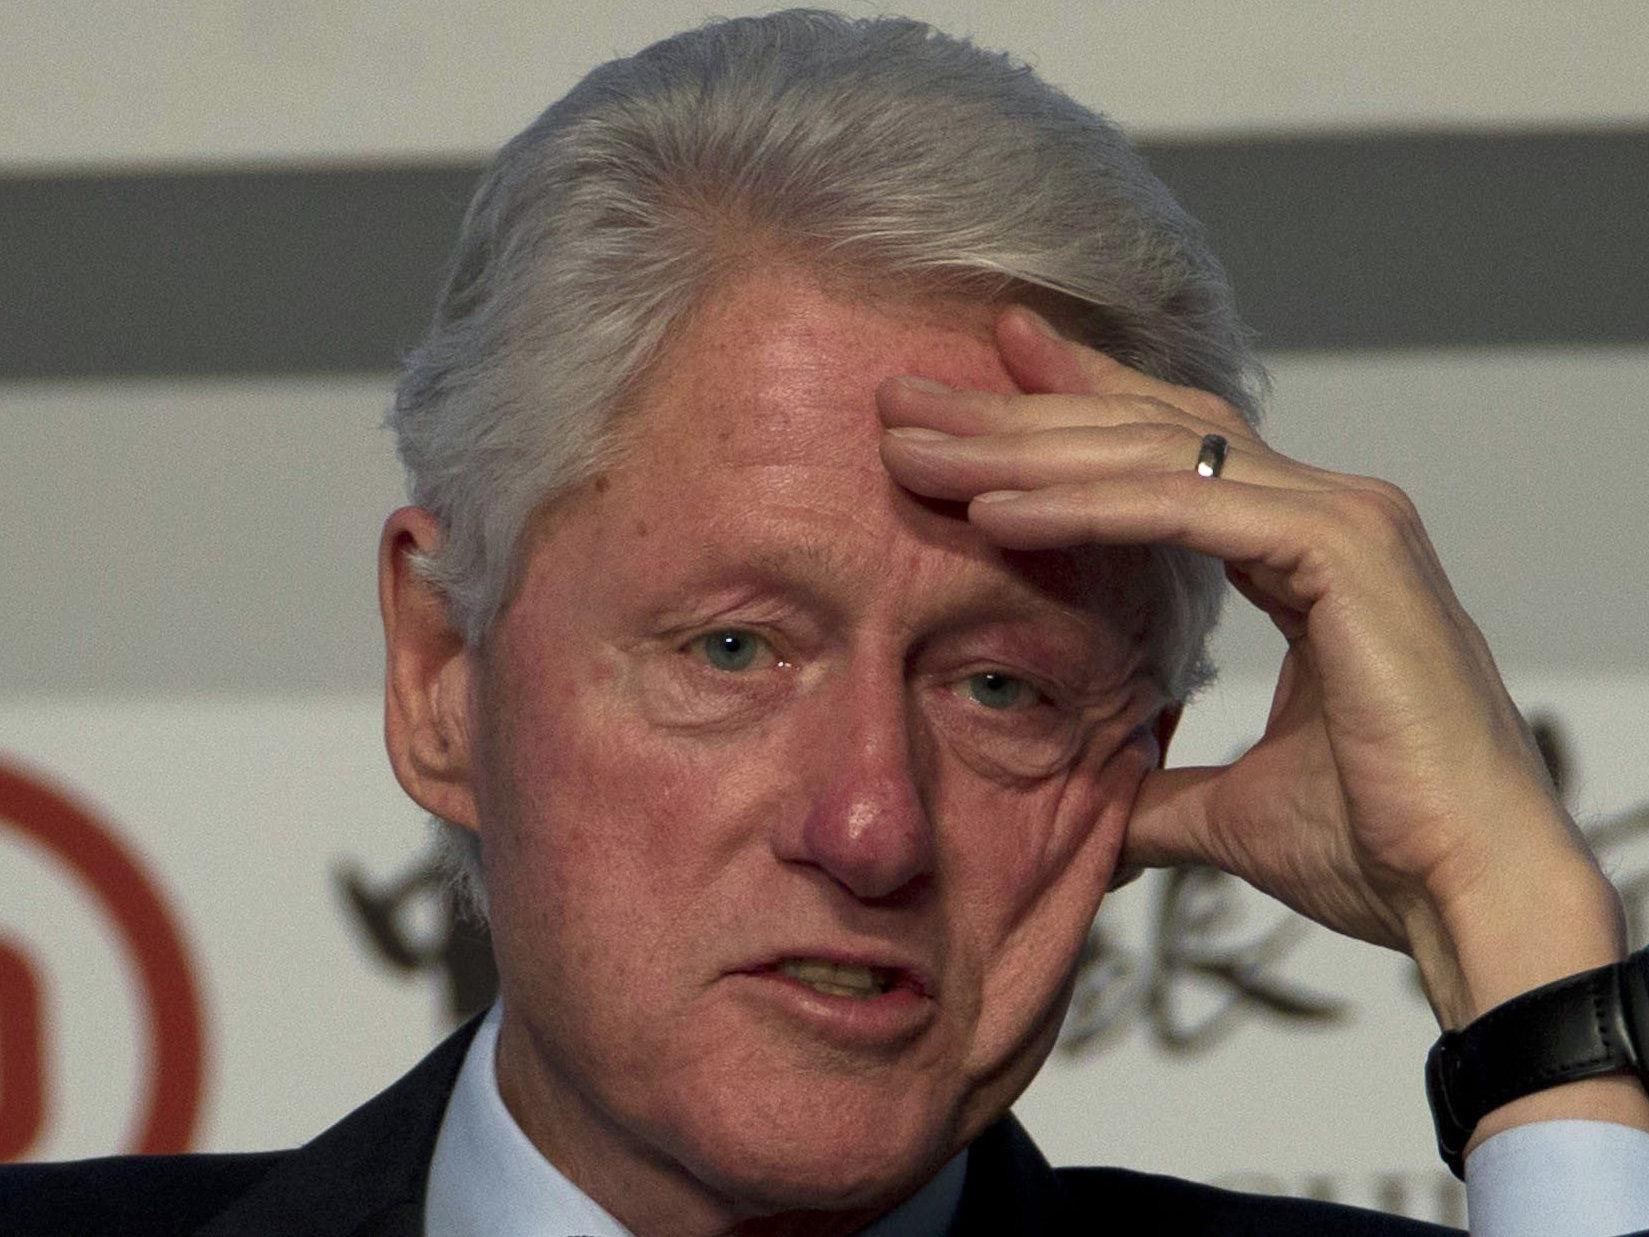 Clinton-Absage in Wien: Spionagevorwürfe gegen Veranstalter